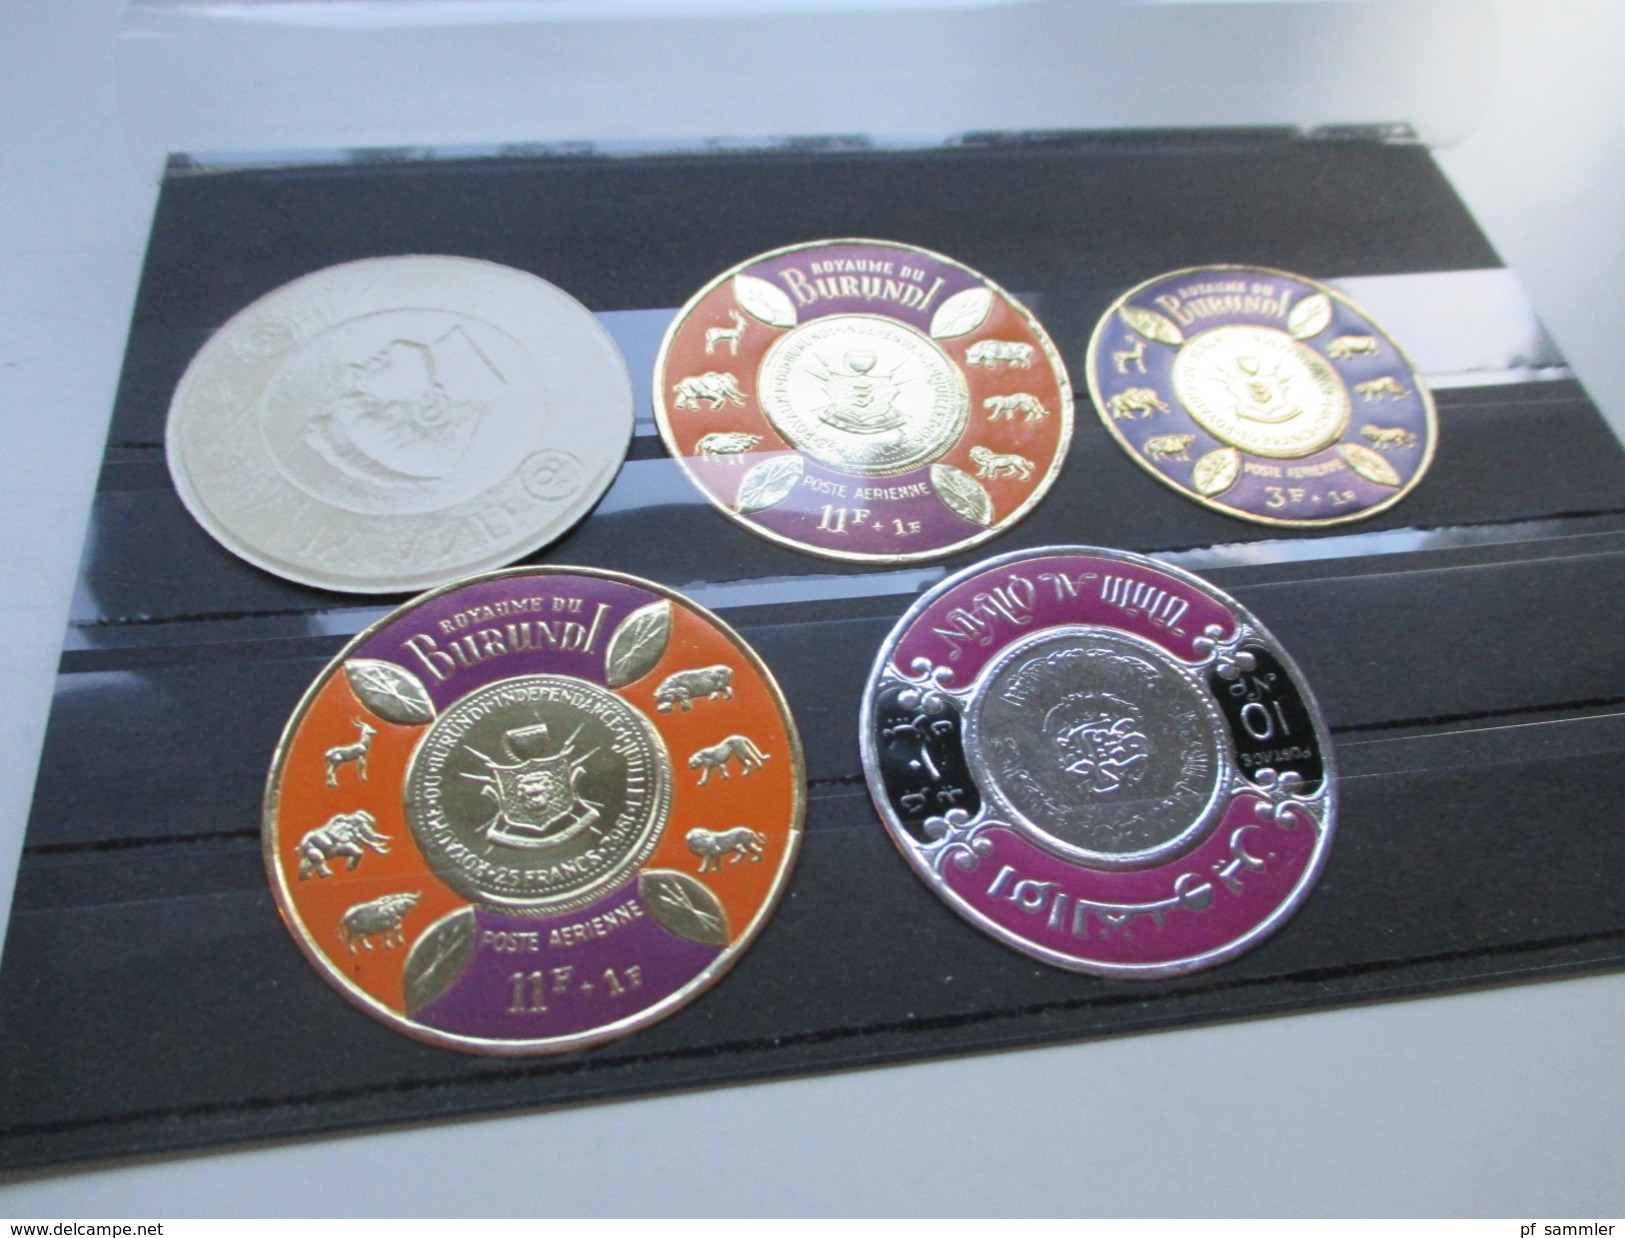 Afrika Bhutan / Burundi / Sanda Island usw. Goldmarken / goldene Briefmarken. Rund! 14 Marken! 1960er Jahre!